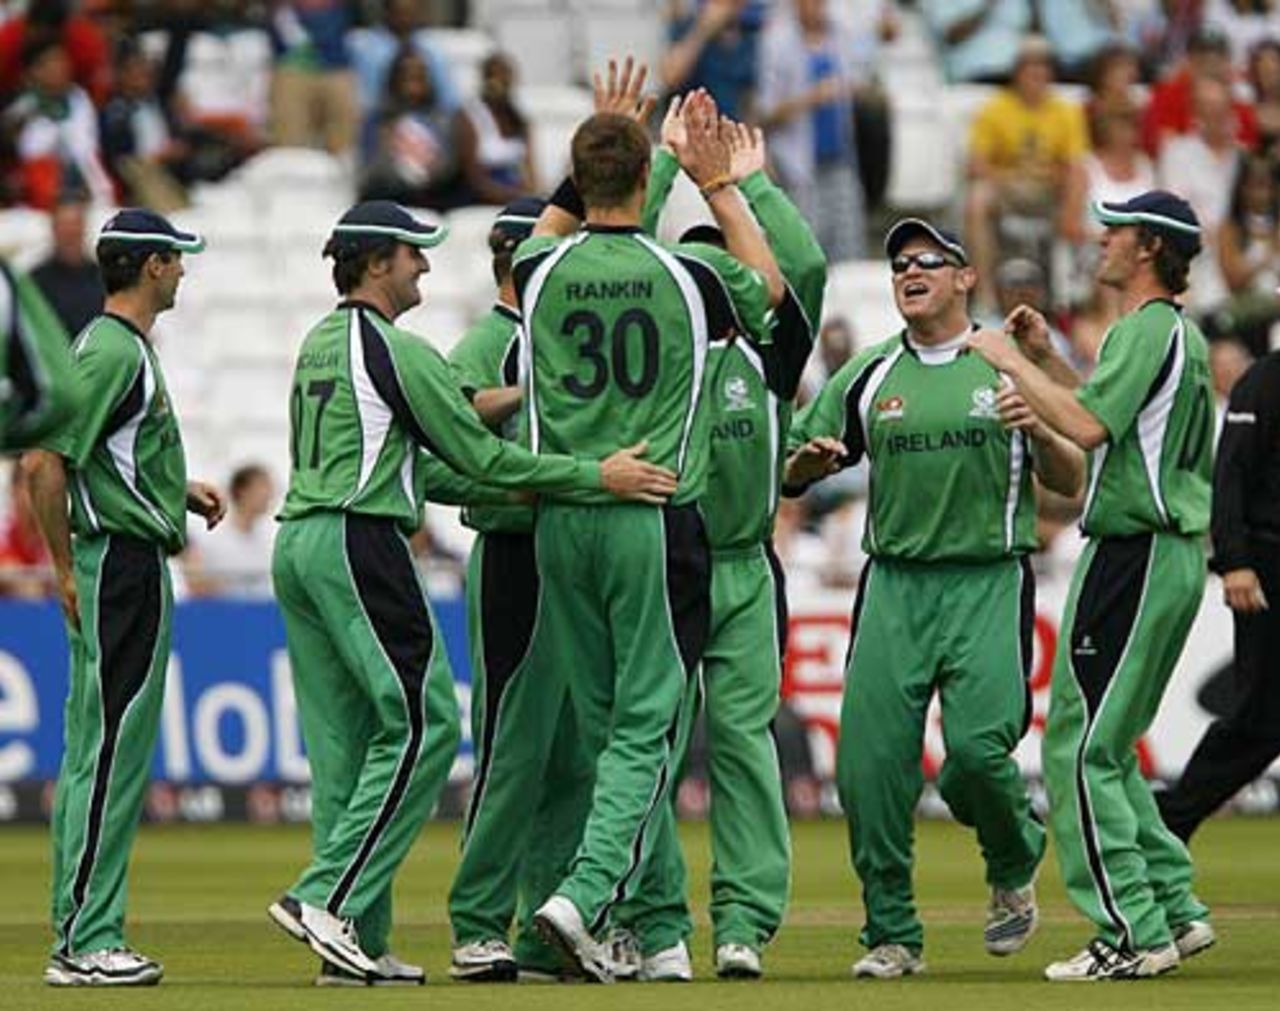 Ireland celebrate after Boyd Rankin strikes in the first over, Ireland v Sri Lanka, ICC World Twenty20, Lord's, June 14, 2009